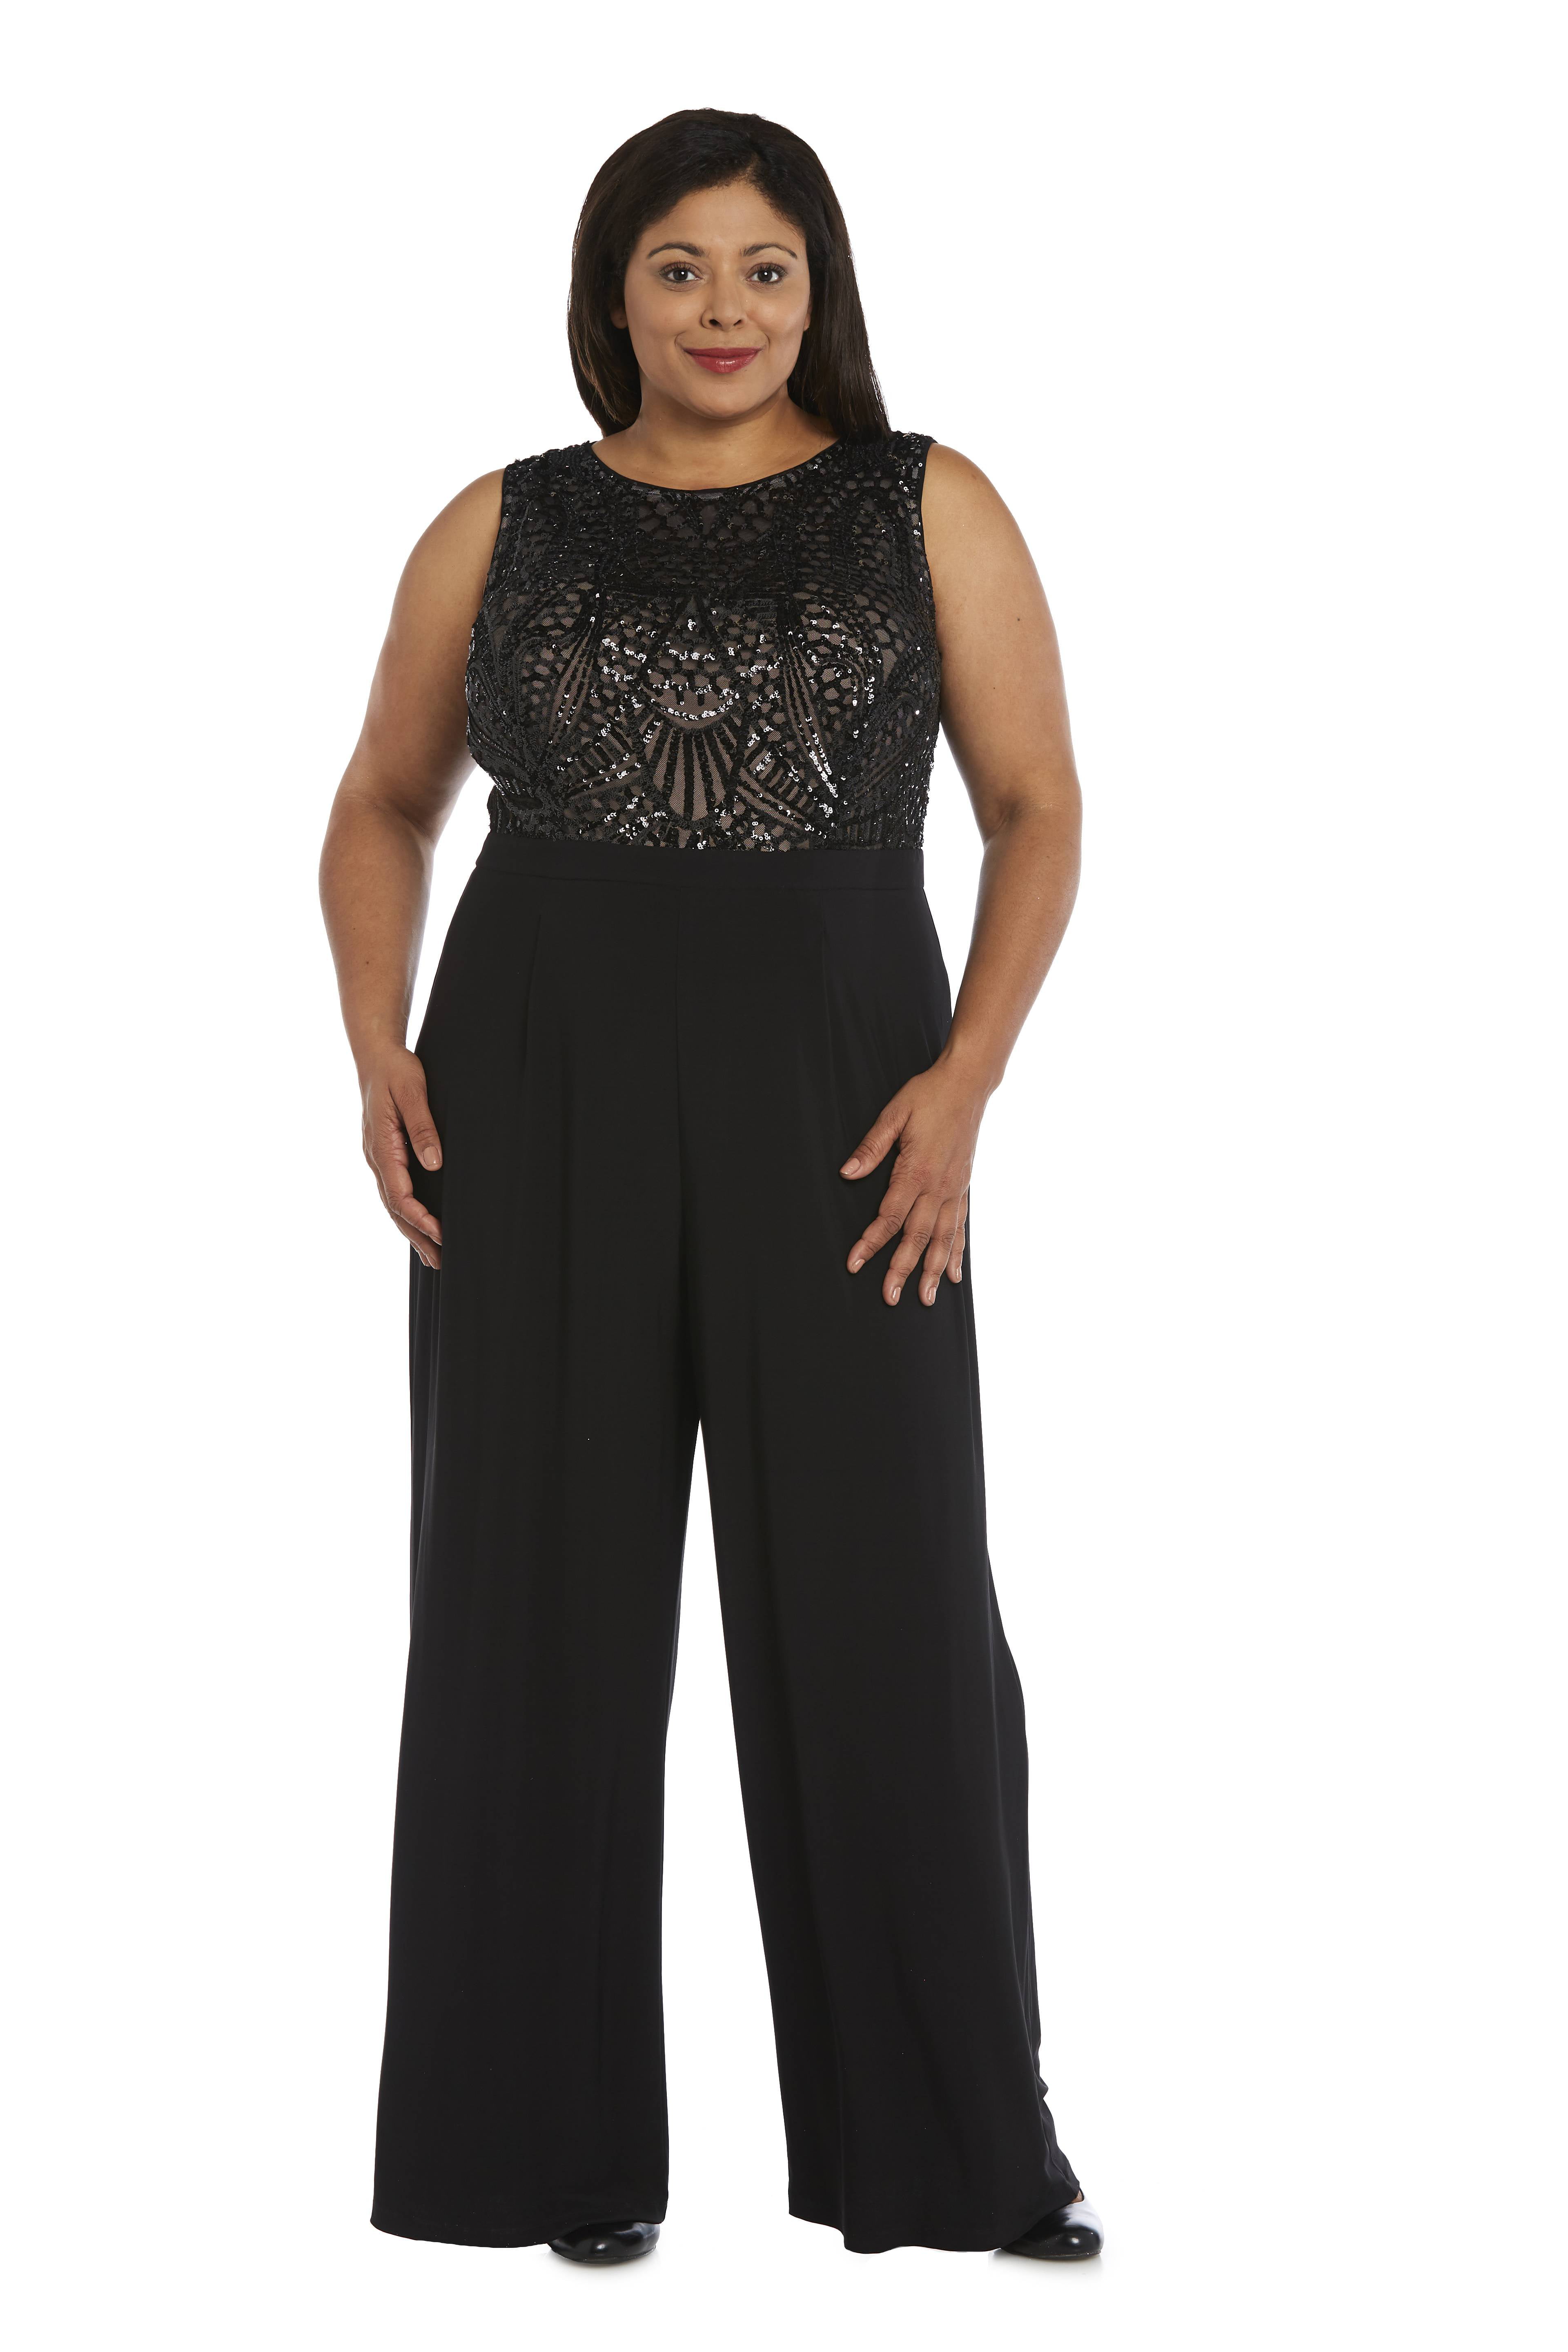 Women's Plus Size 1 Piece Embellished Sequined Jumpsuit - Walmart.com